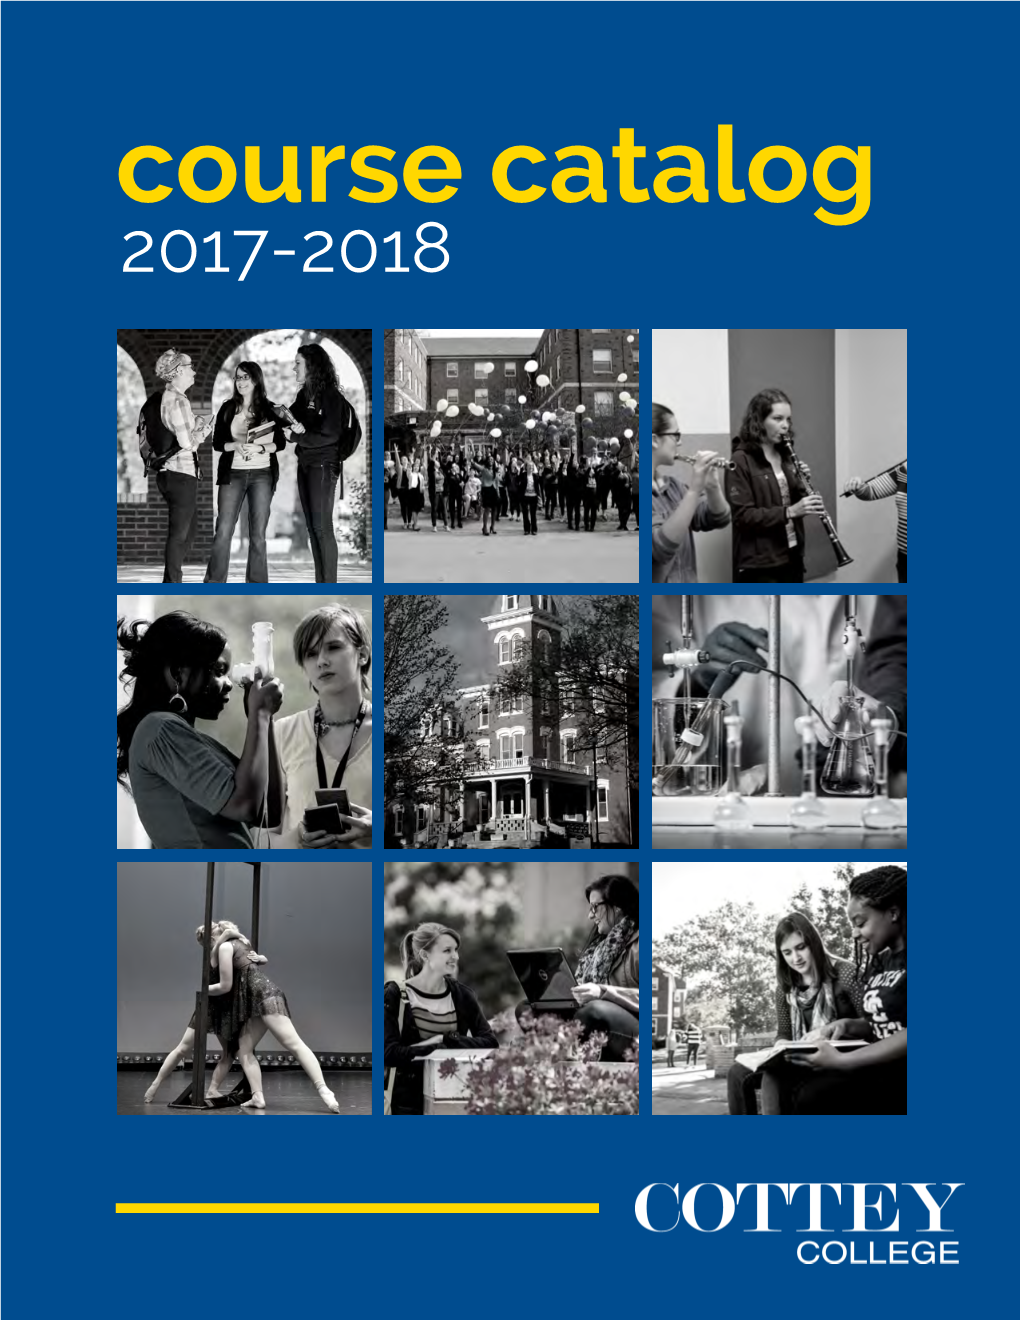 Course Catalog 2017-2018 Introduction